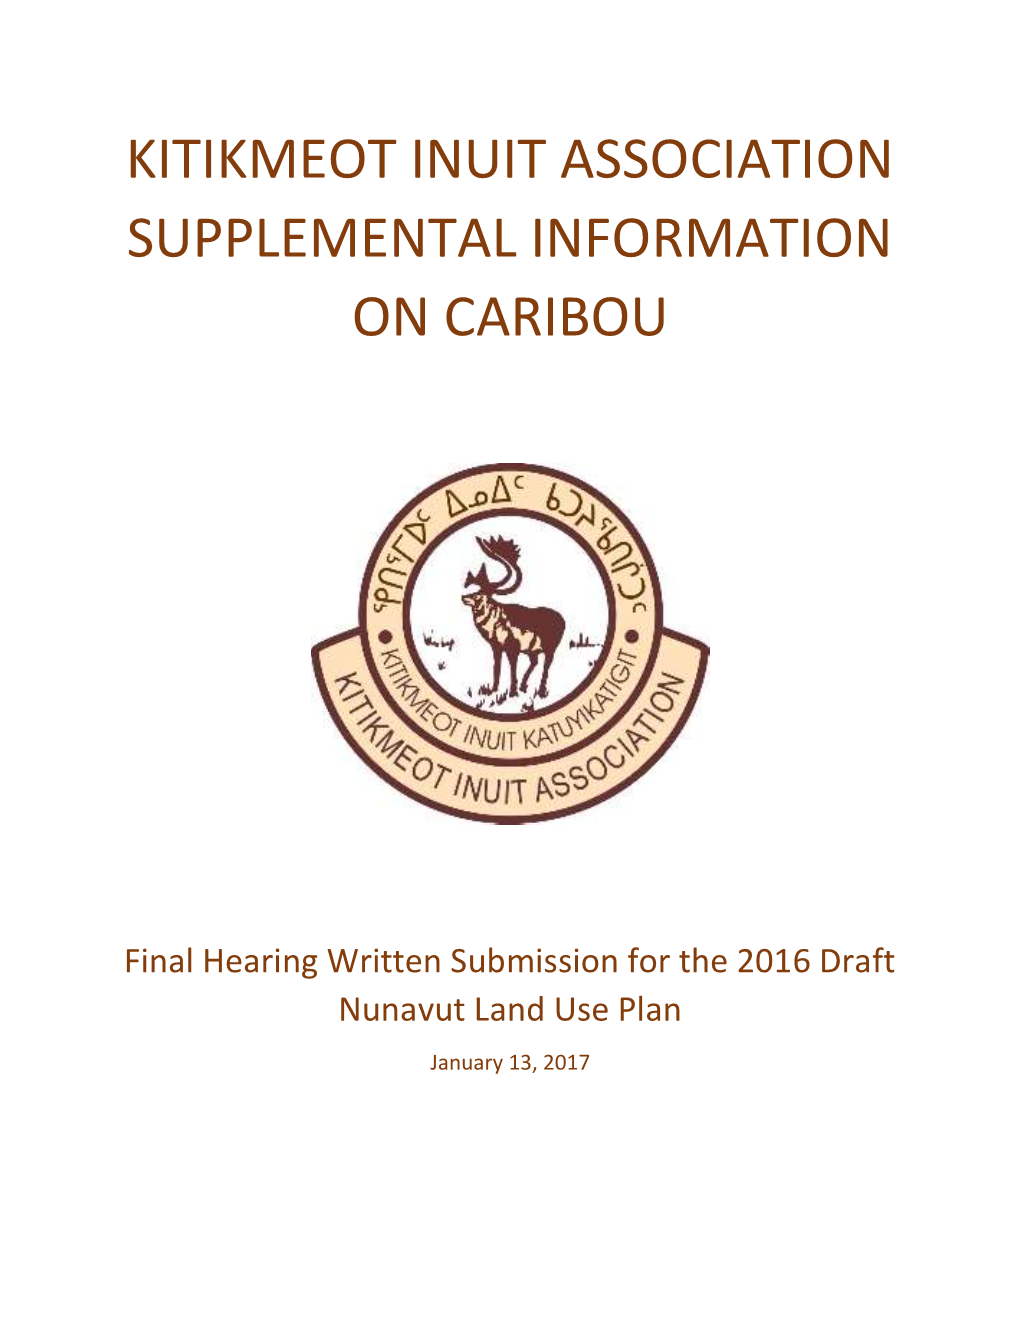 Kitikmeot Inuit Association Supplemental Information on Caribou